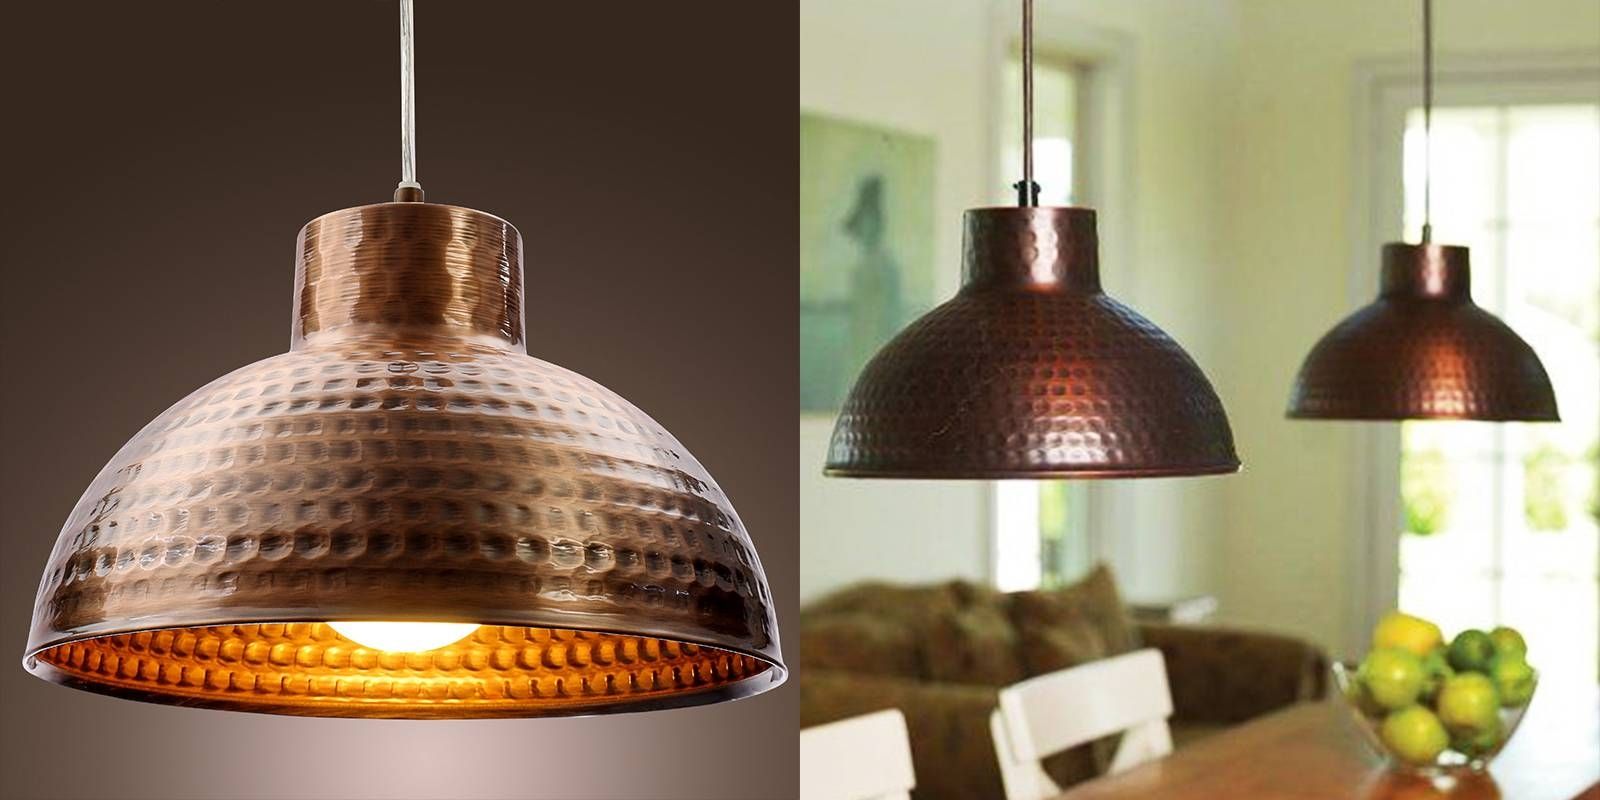 hammered copper kitchen lighting